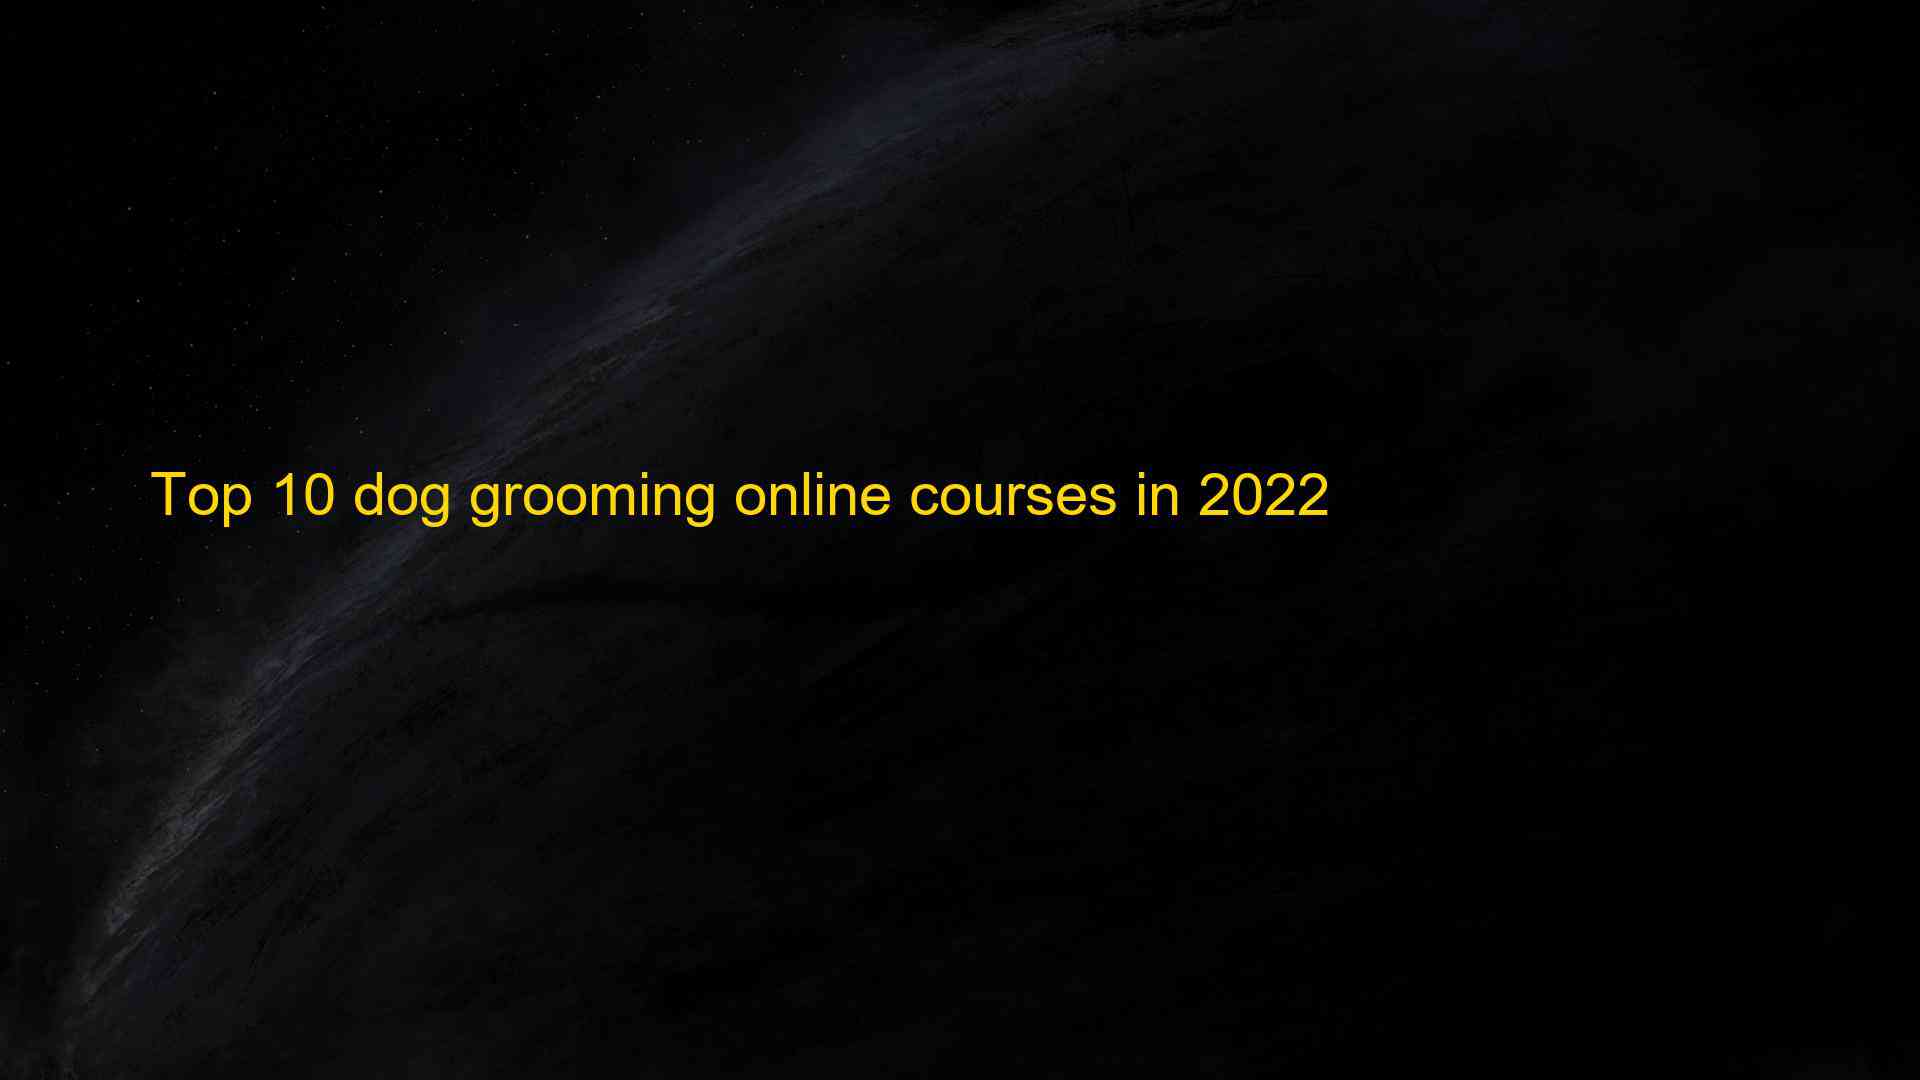 Top 10 dog grooming online courses in 2022 1661877038